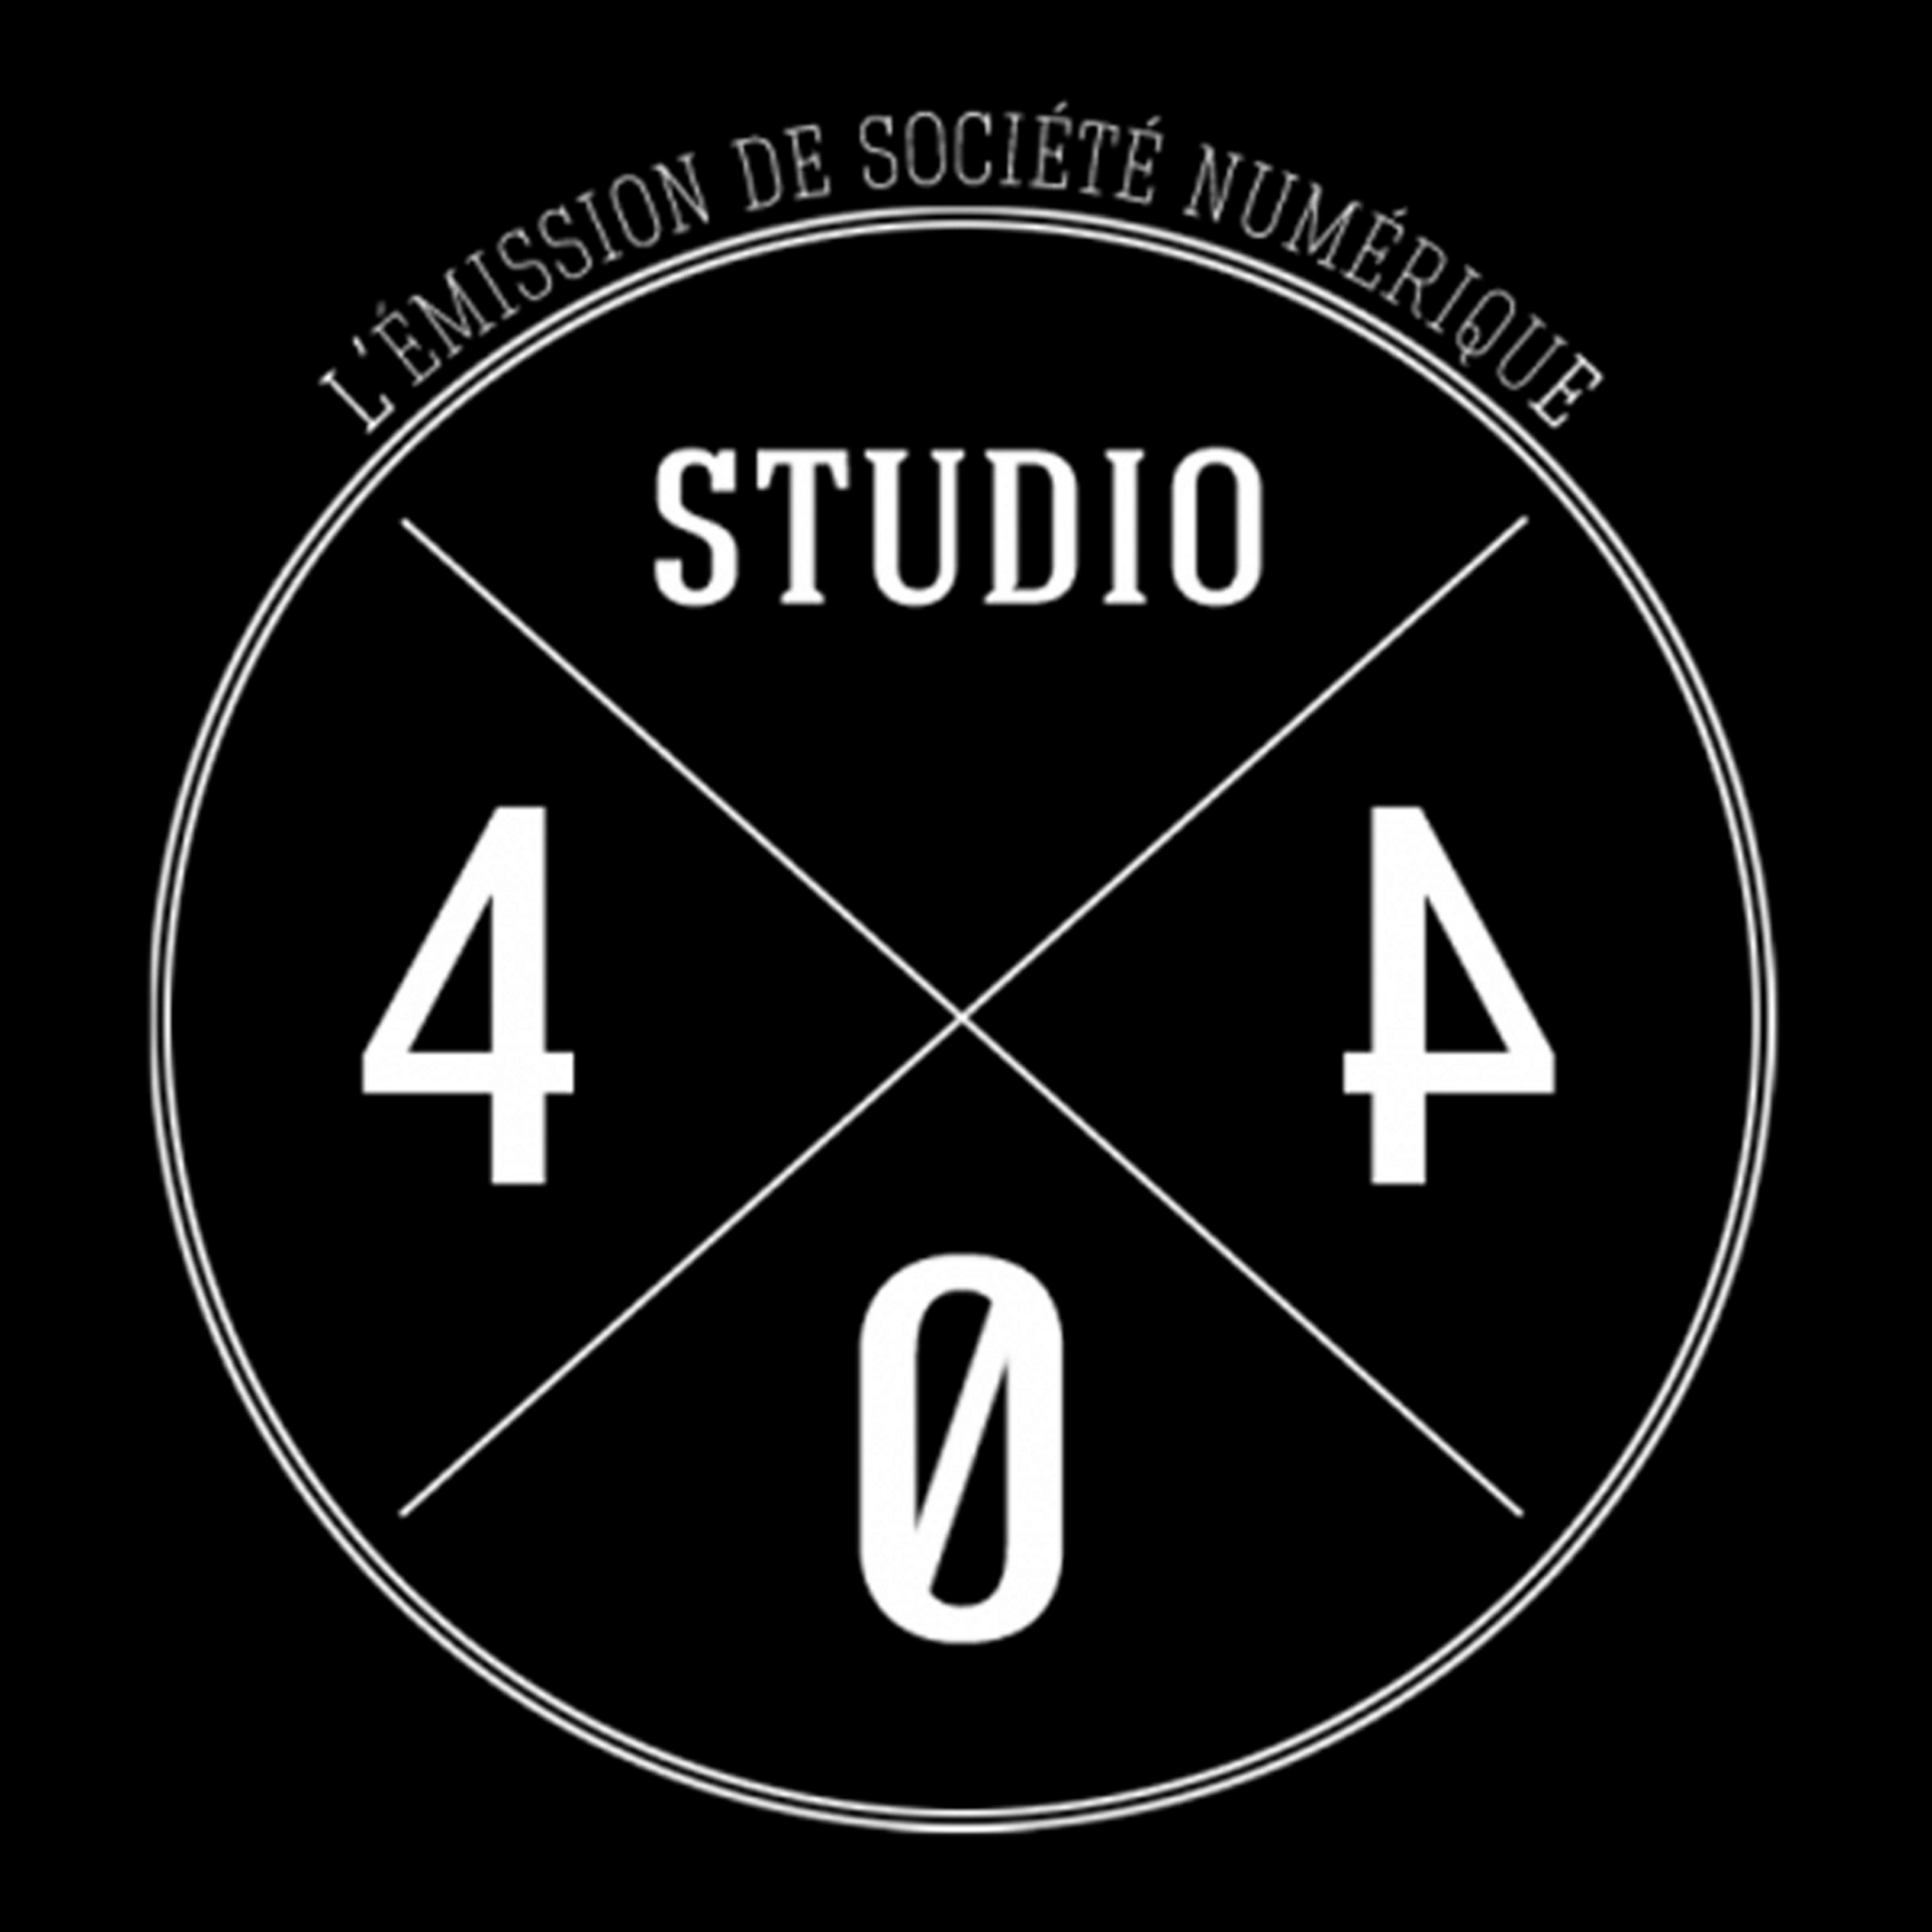 Studio 404 #59 / Avril 2018 : Morning routine, Communauté, Attention et Fin d'Internet